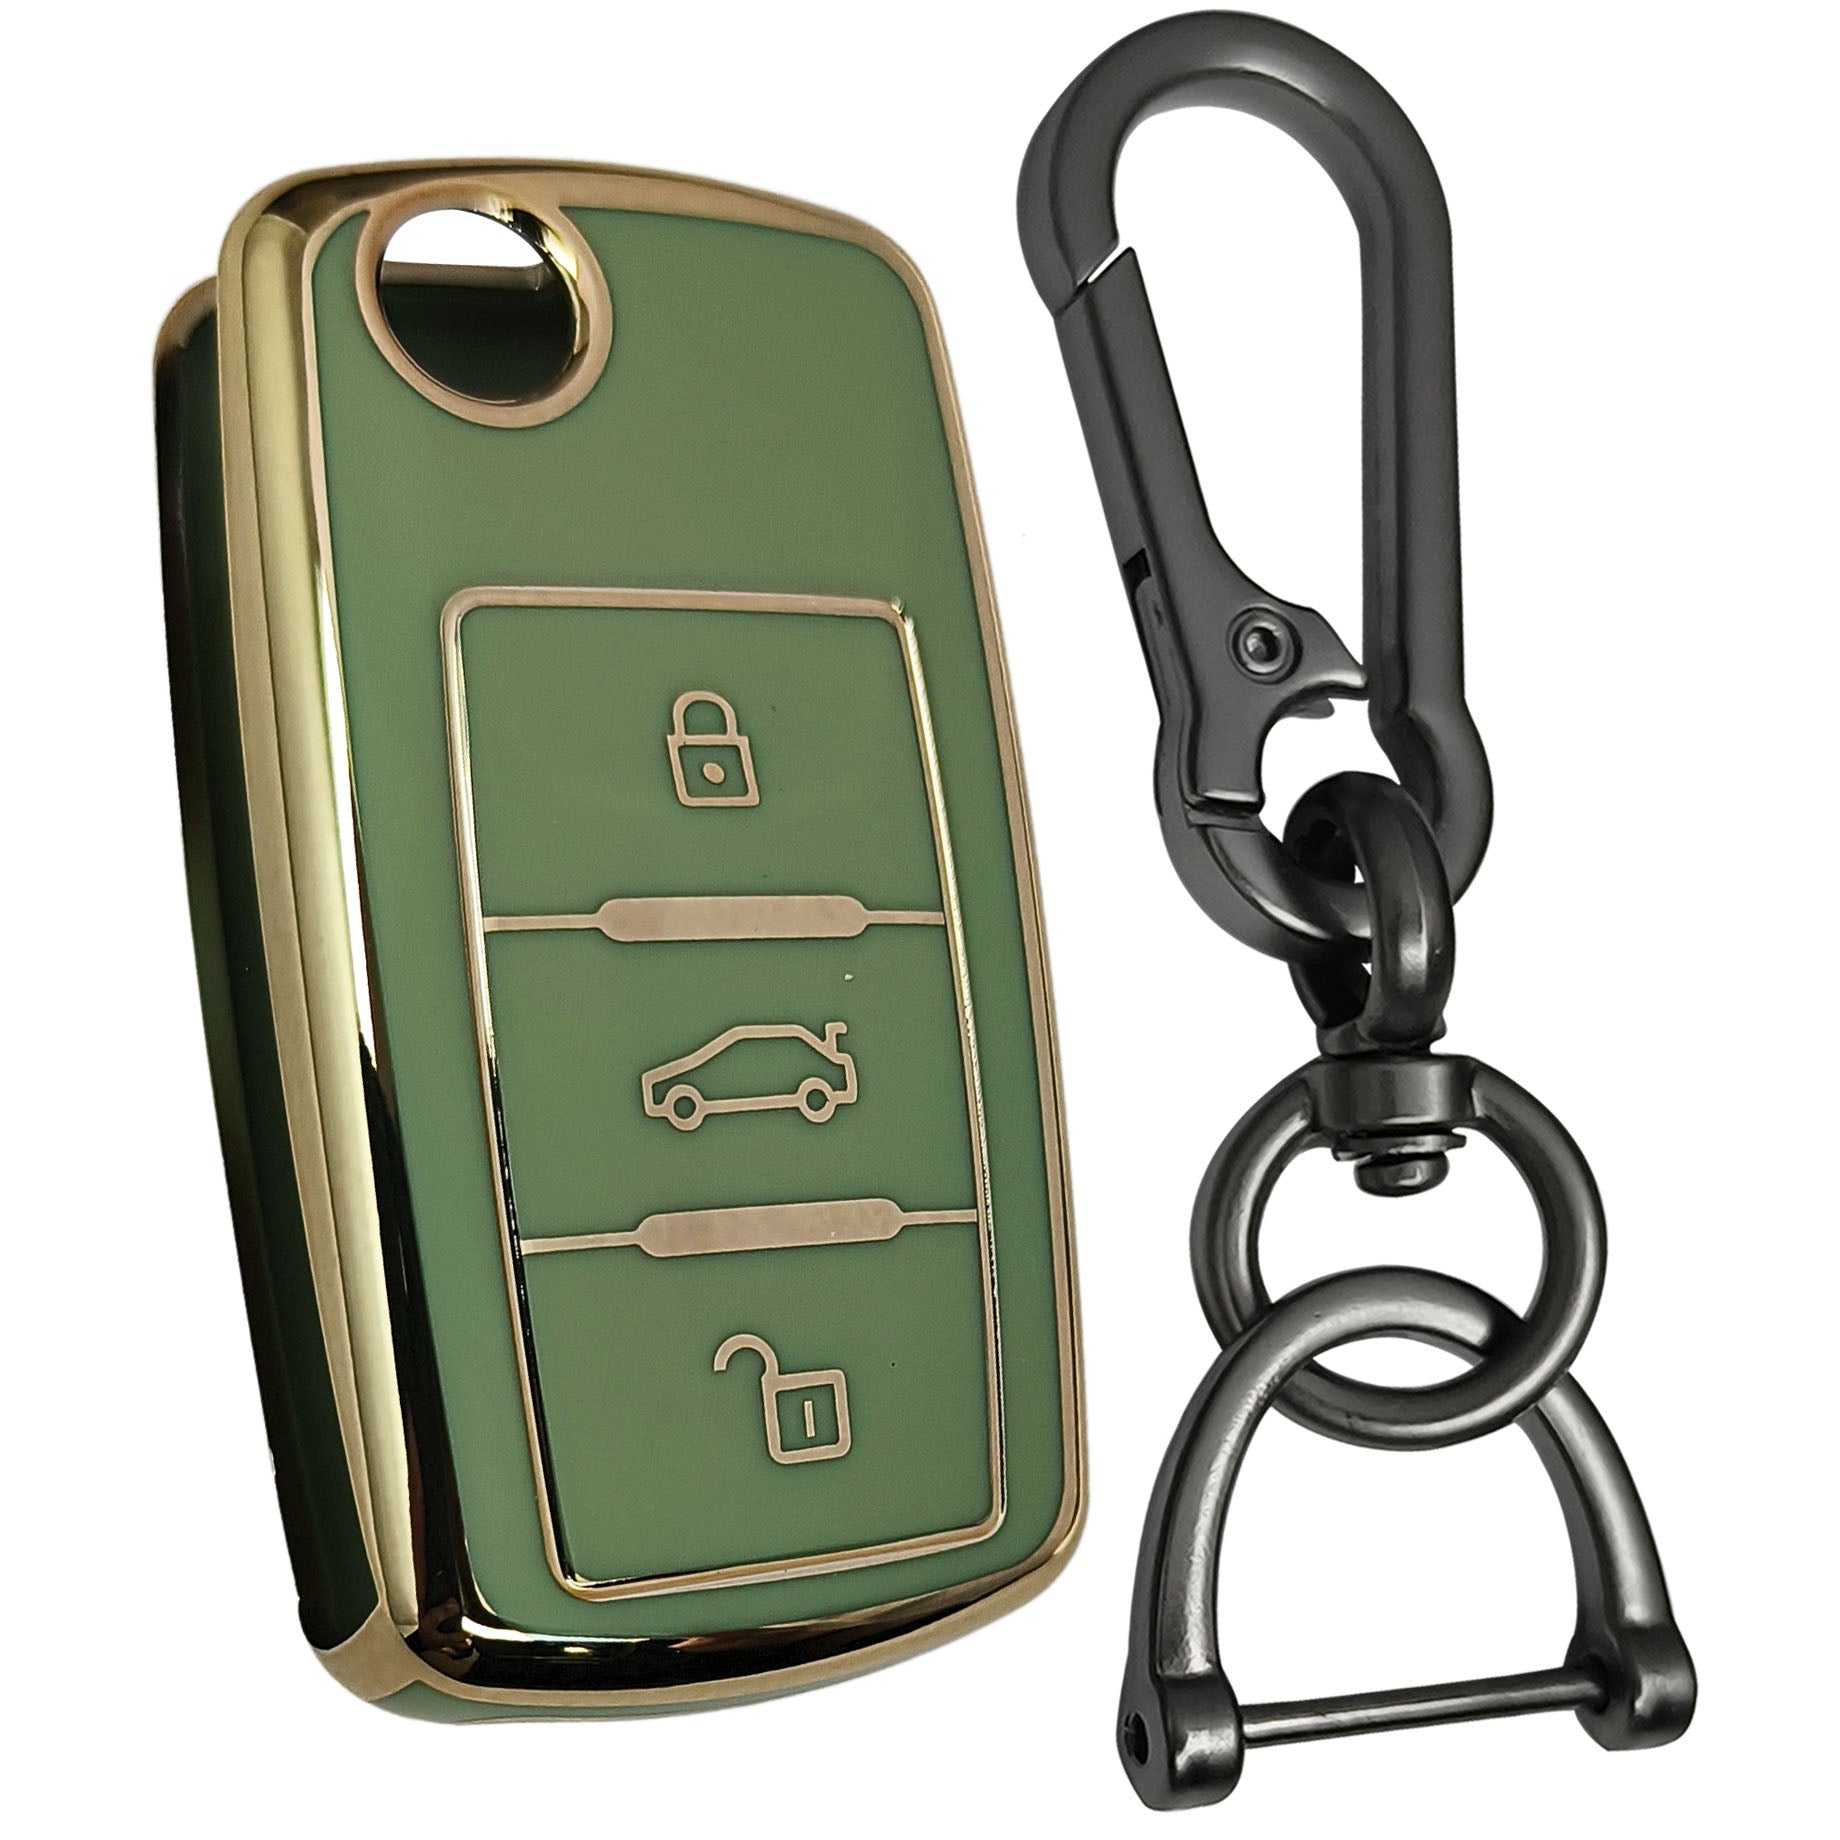 skoda octavia laura fabia 3 button flip key tpu green gold key cover case accessories keychain